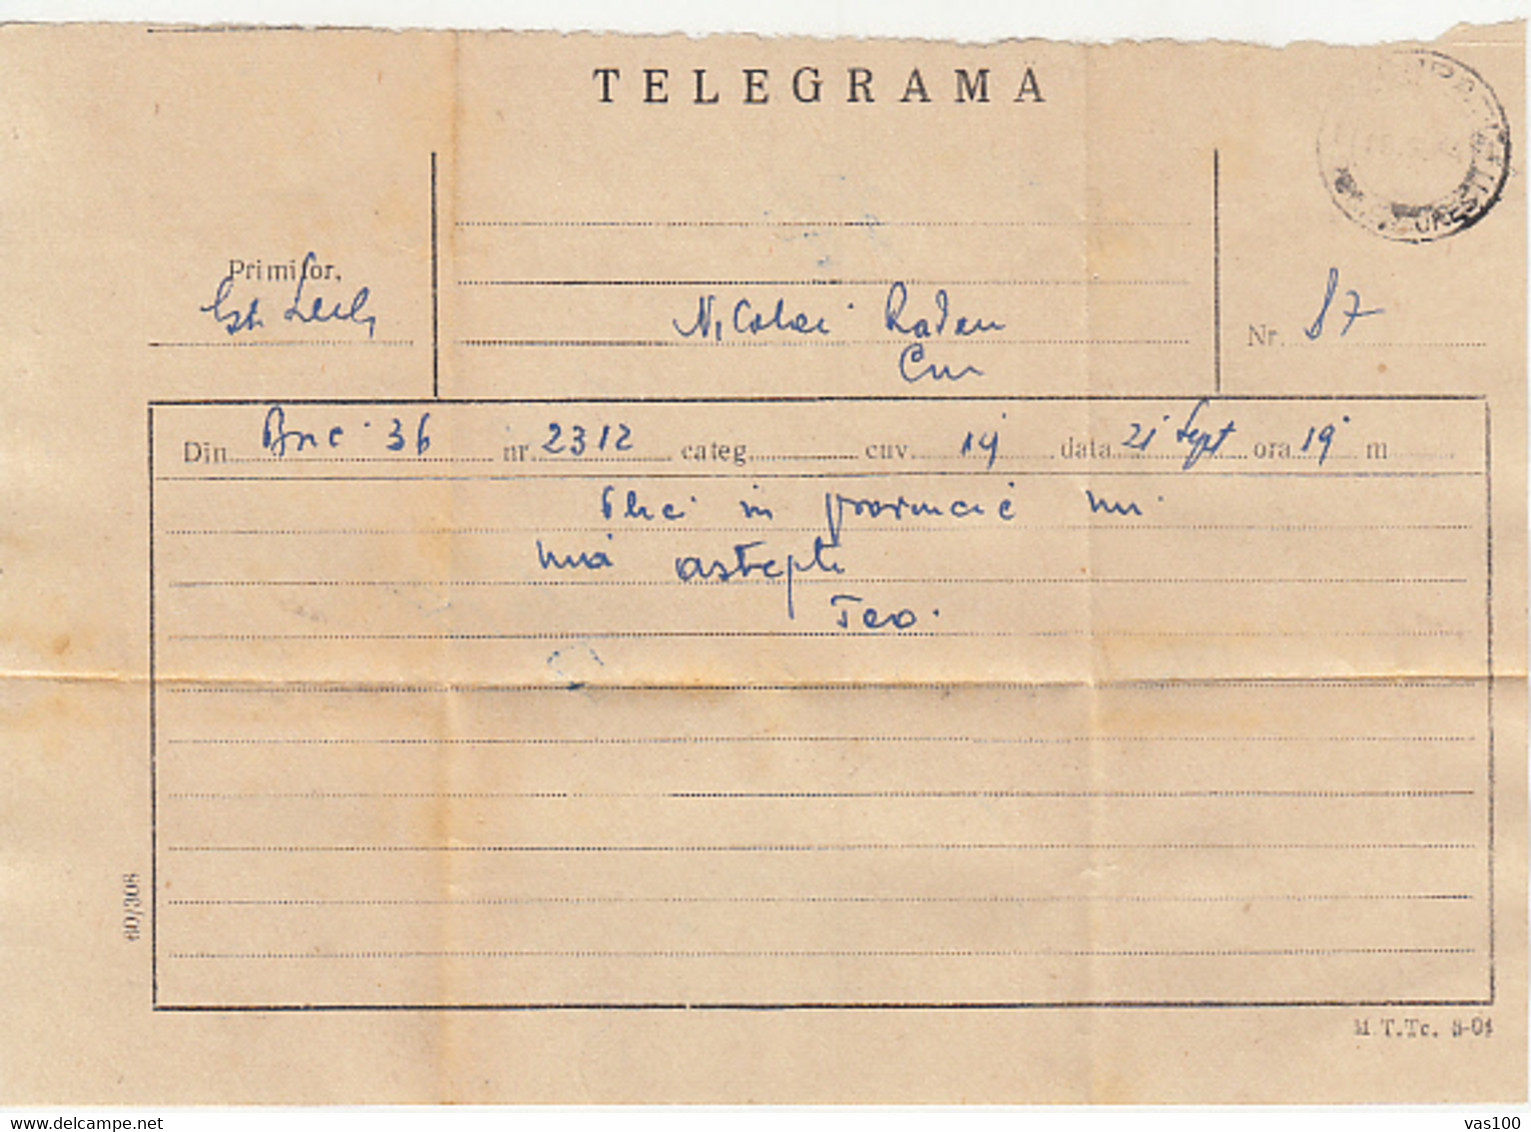 TELEGRAPH, TELEGRAMME SENT FROM BUCHAREST TO CLUJ, 1964, ROMANIA - Telégrafos